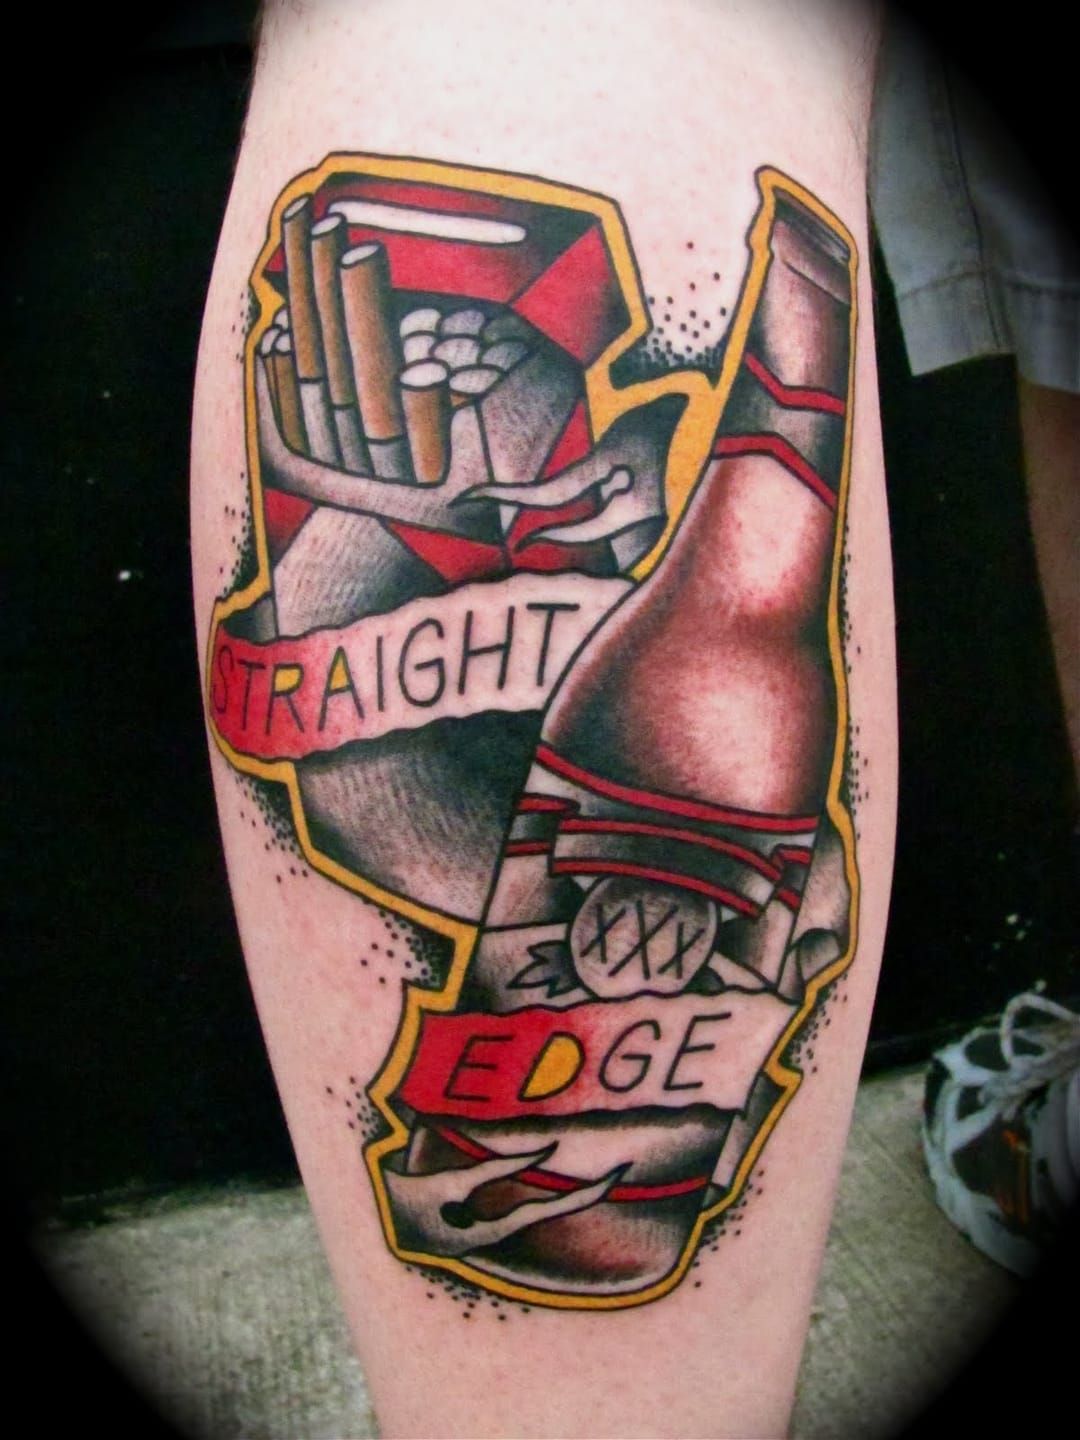 Straight edge tattoo